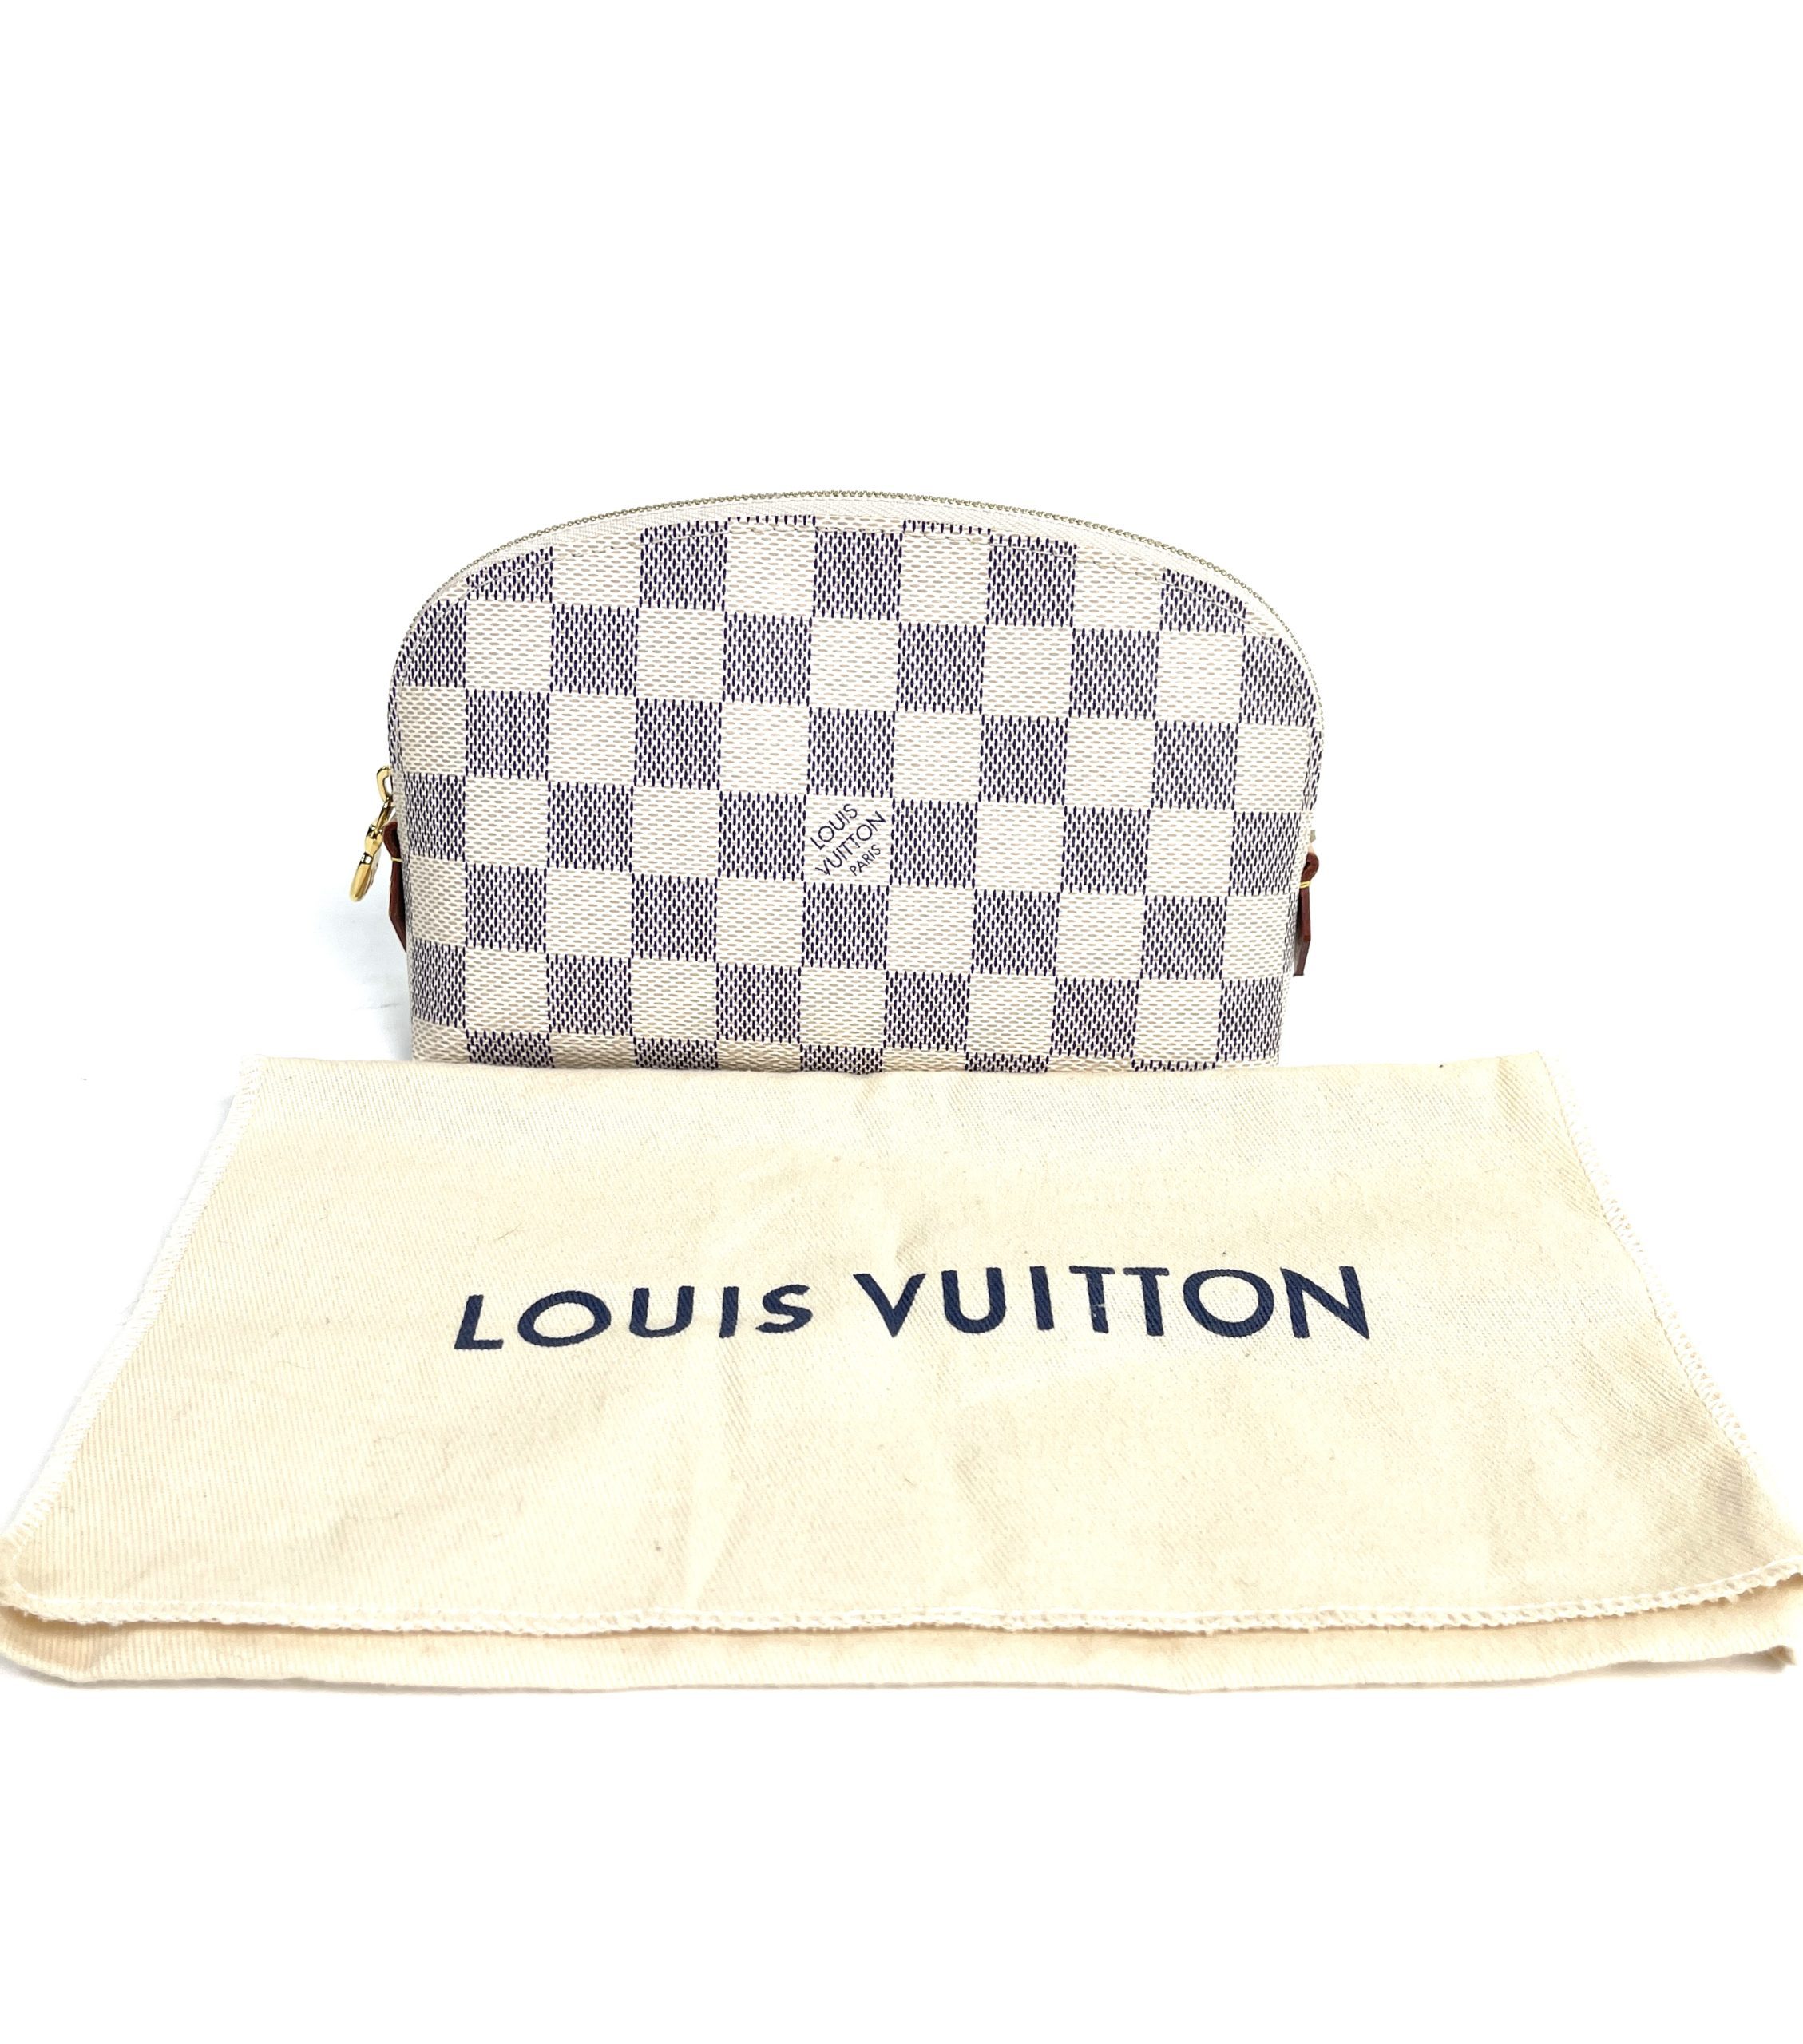 LOUIS VUITTON Damier Azur Cosmetic Pouch White